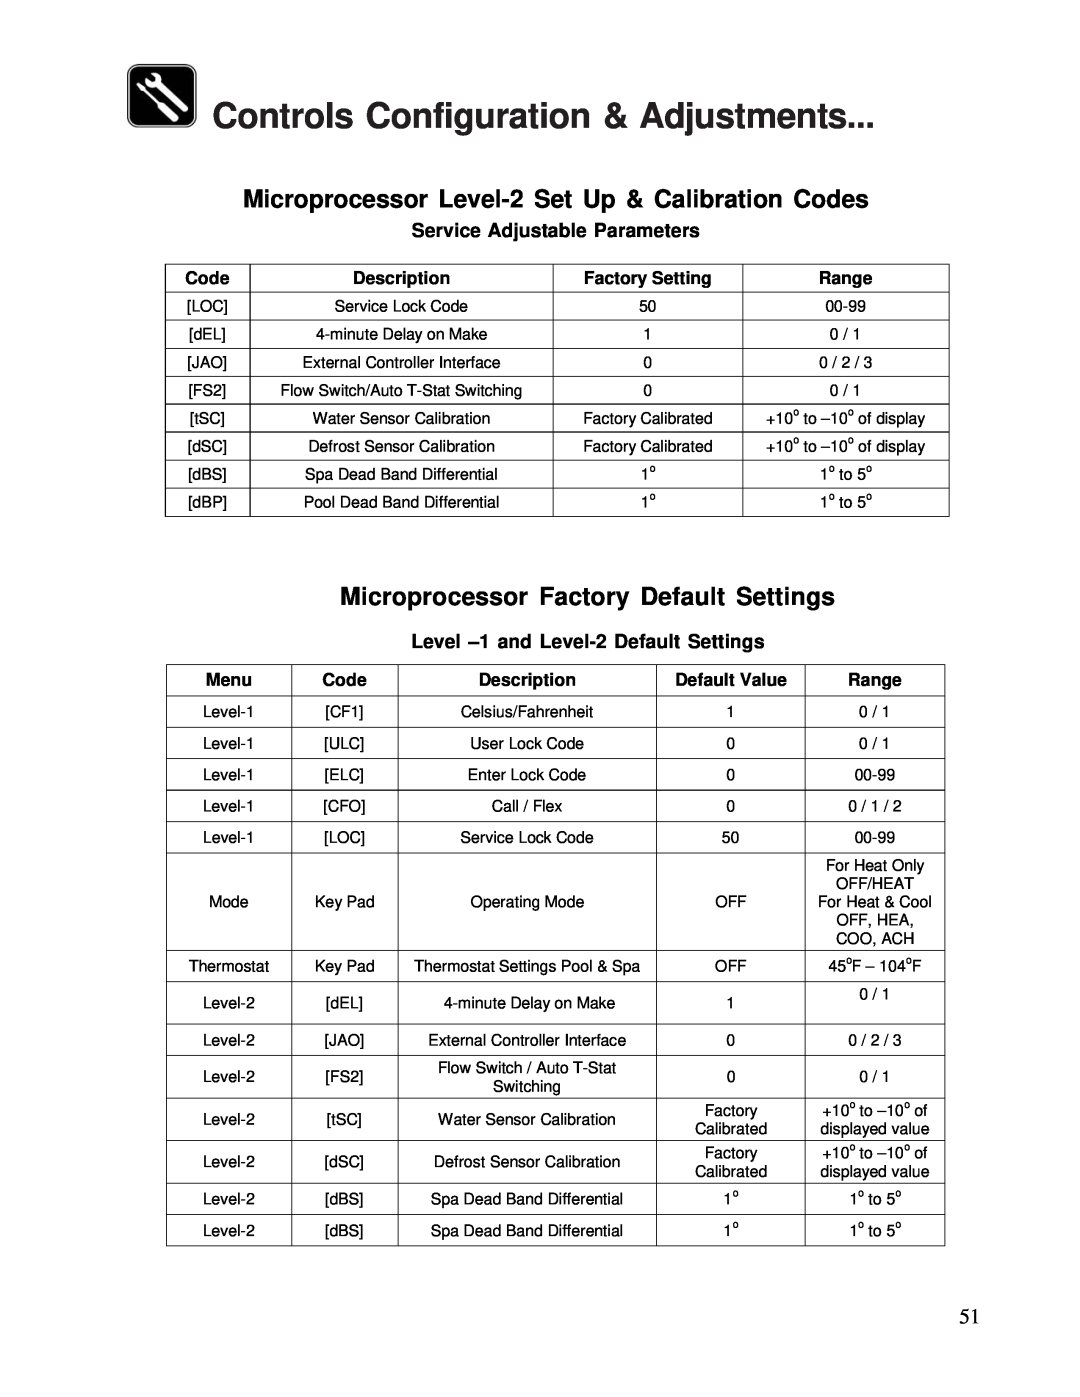 Aquacal 100 Microprocessor Level-2Set Up & Calibration Codes, Microprocessor Factory Default Settings, Description, Range 